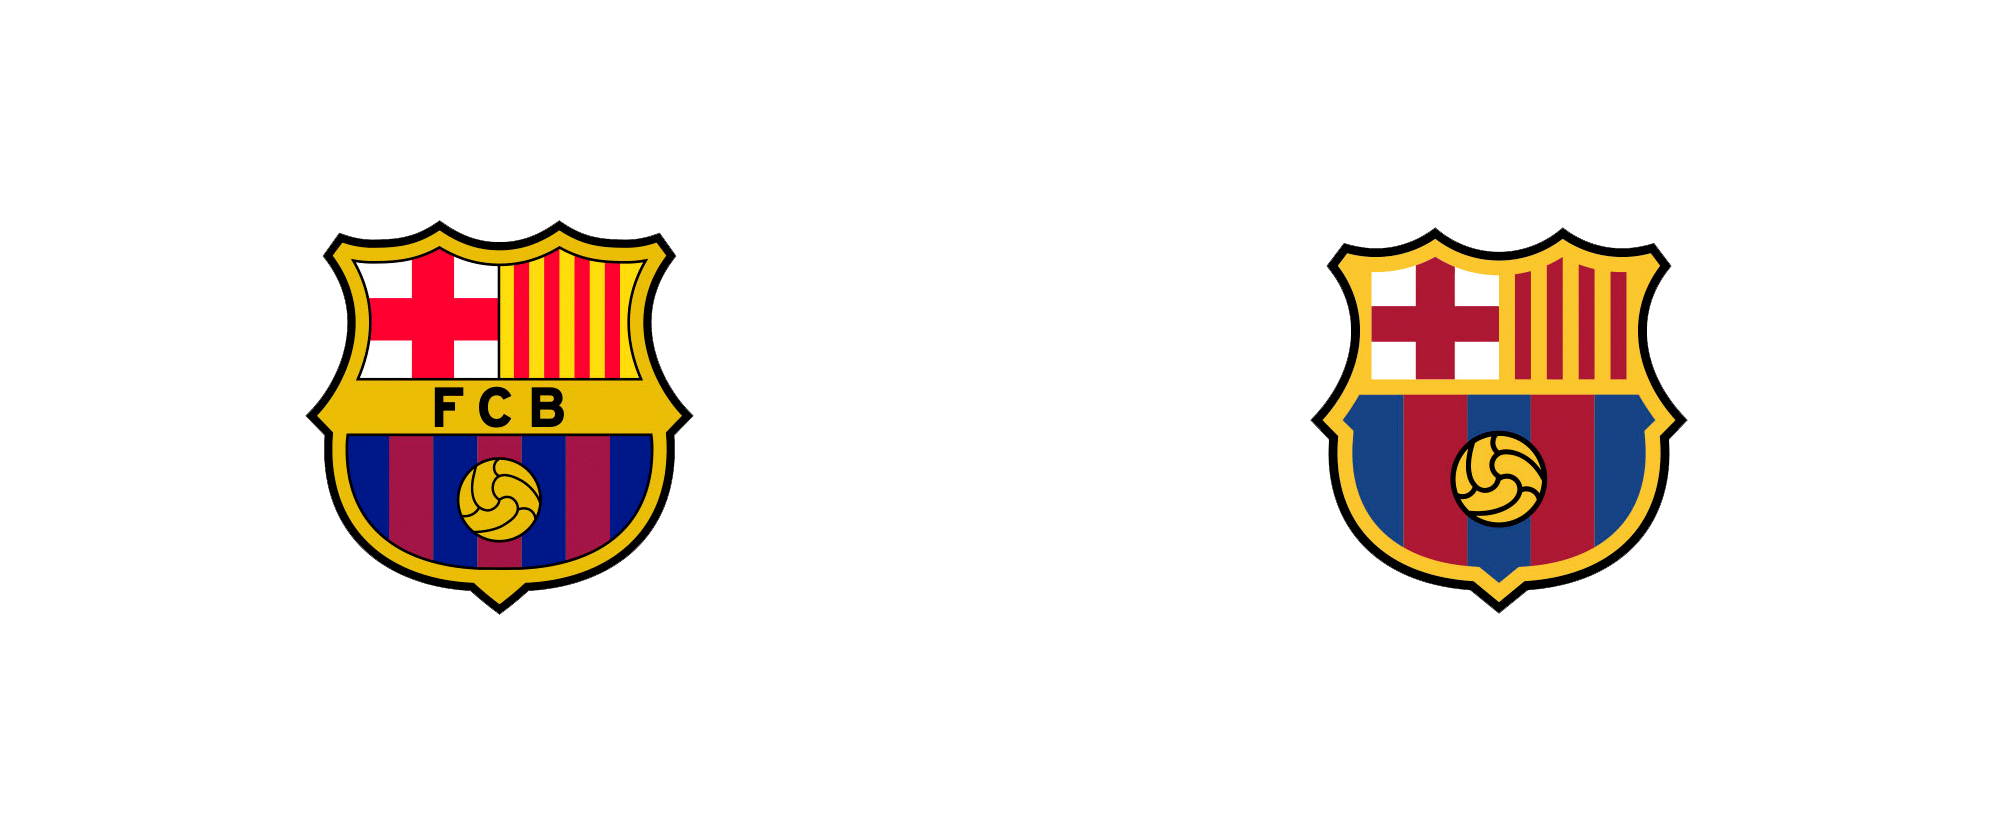 FC BARCELONA ( redesign logo )